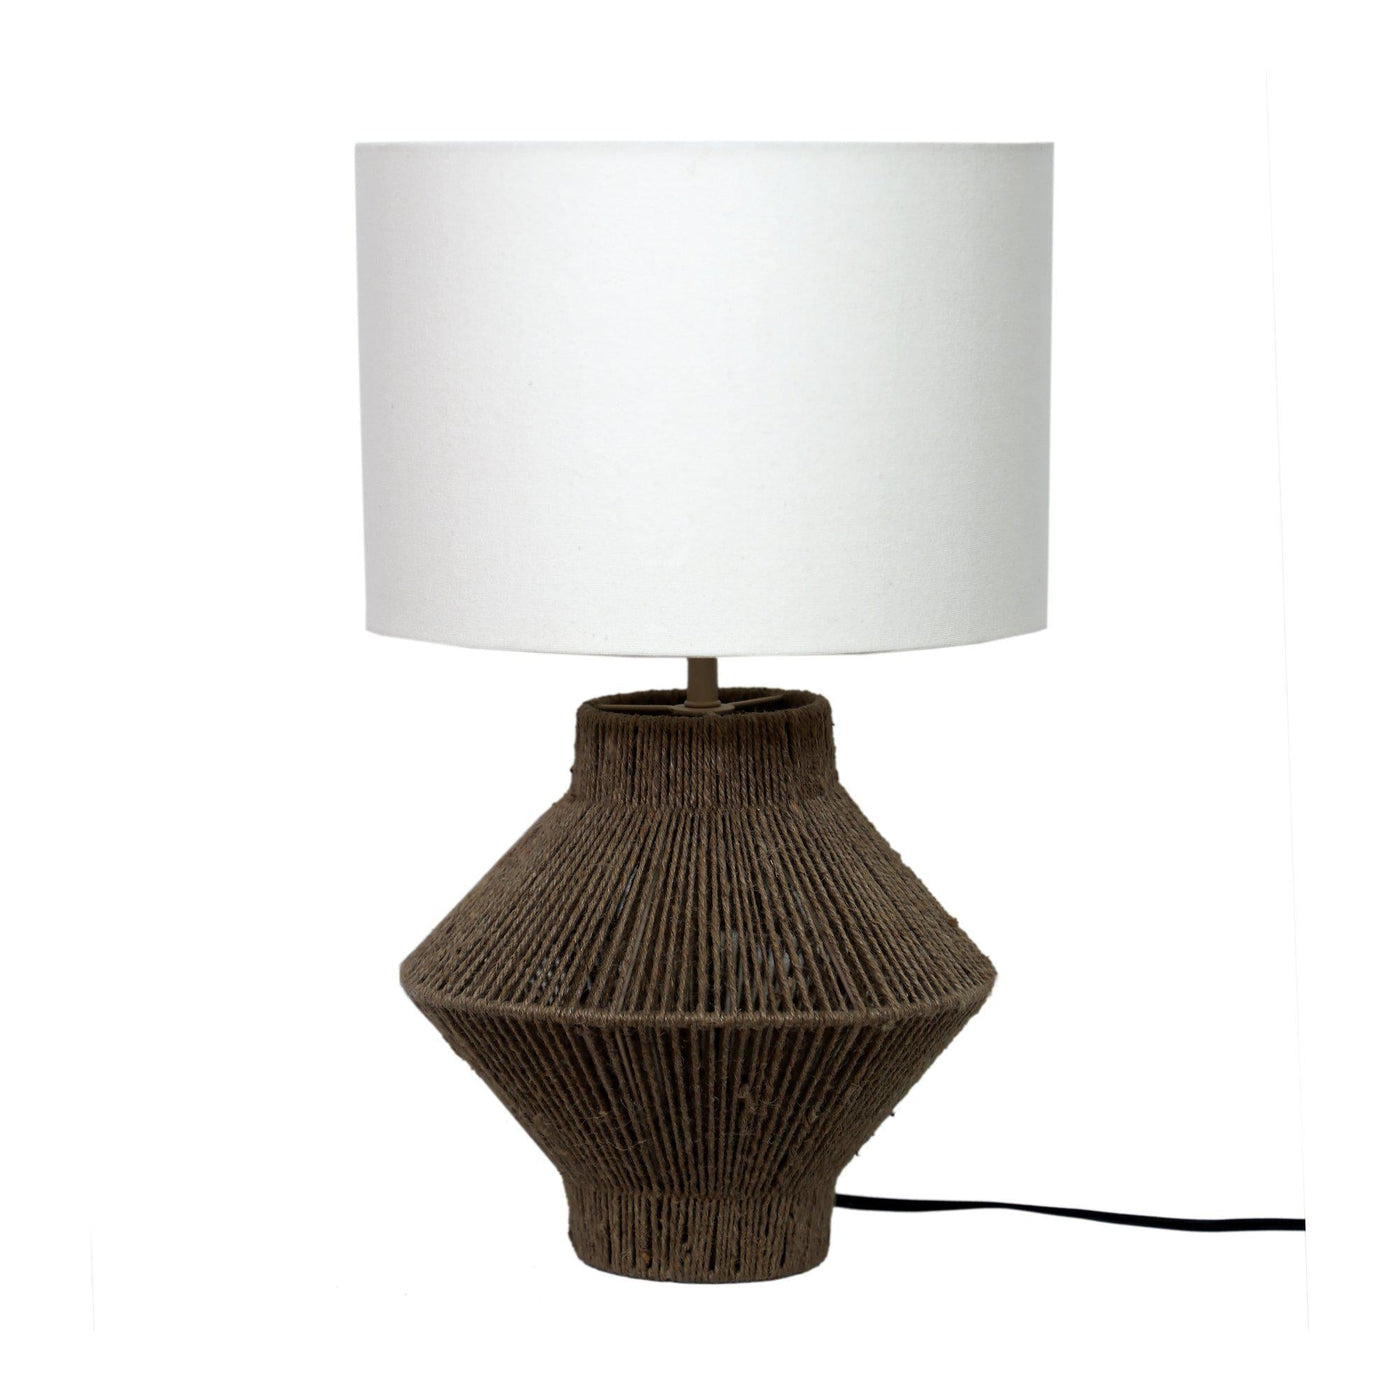 Newport Table Lamp